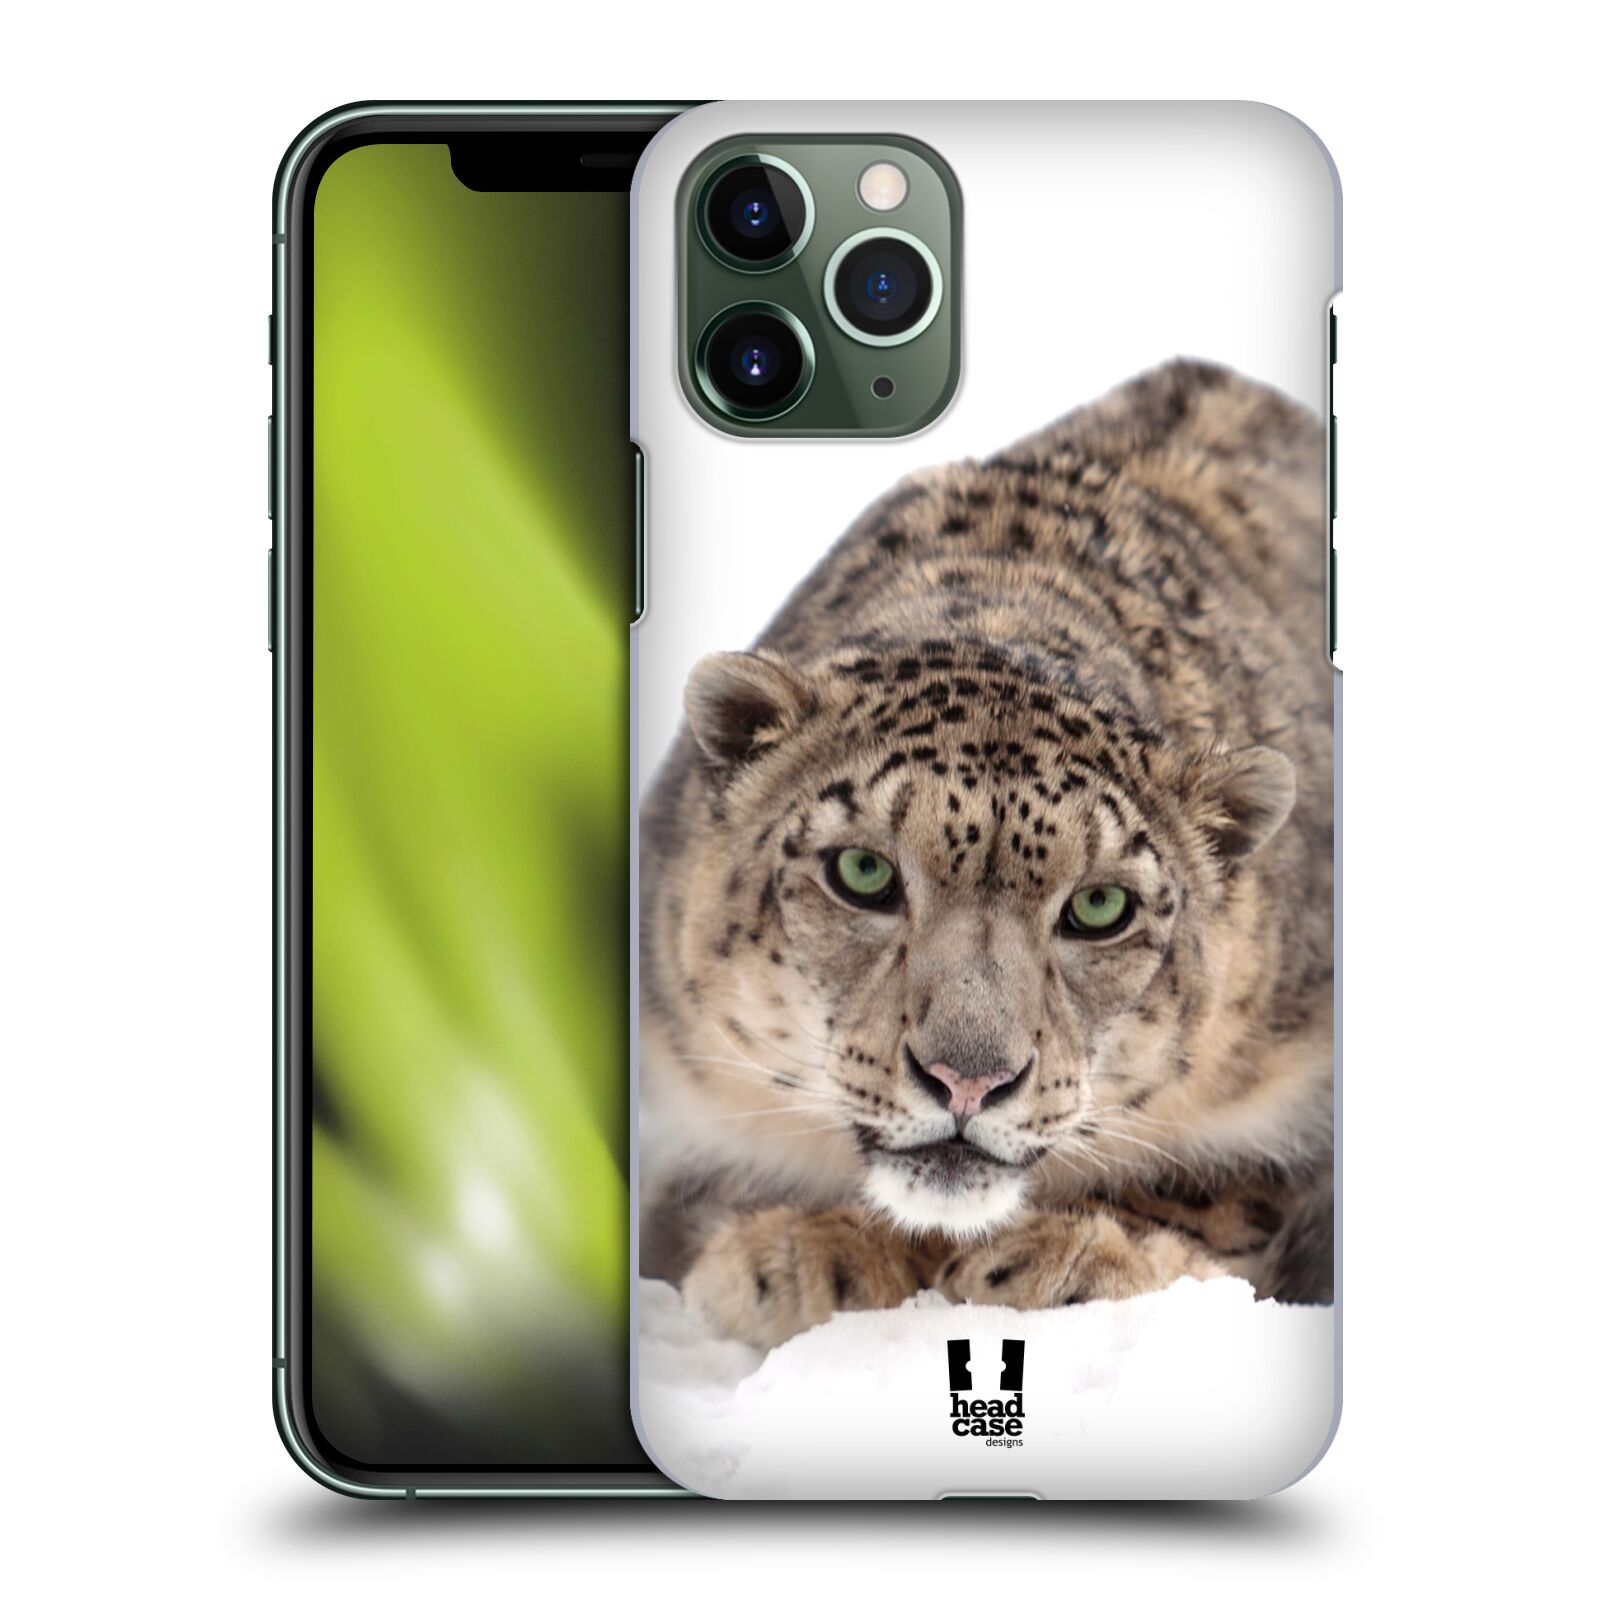 Pouzdro na mobil Apple Iphone 11 PRO - HEAD CASE - vzor Divočina, Divoký život a zvířata foto SNĚŽNÝ LEOPARD